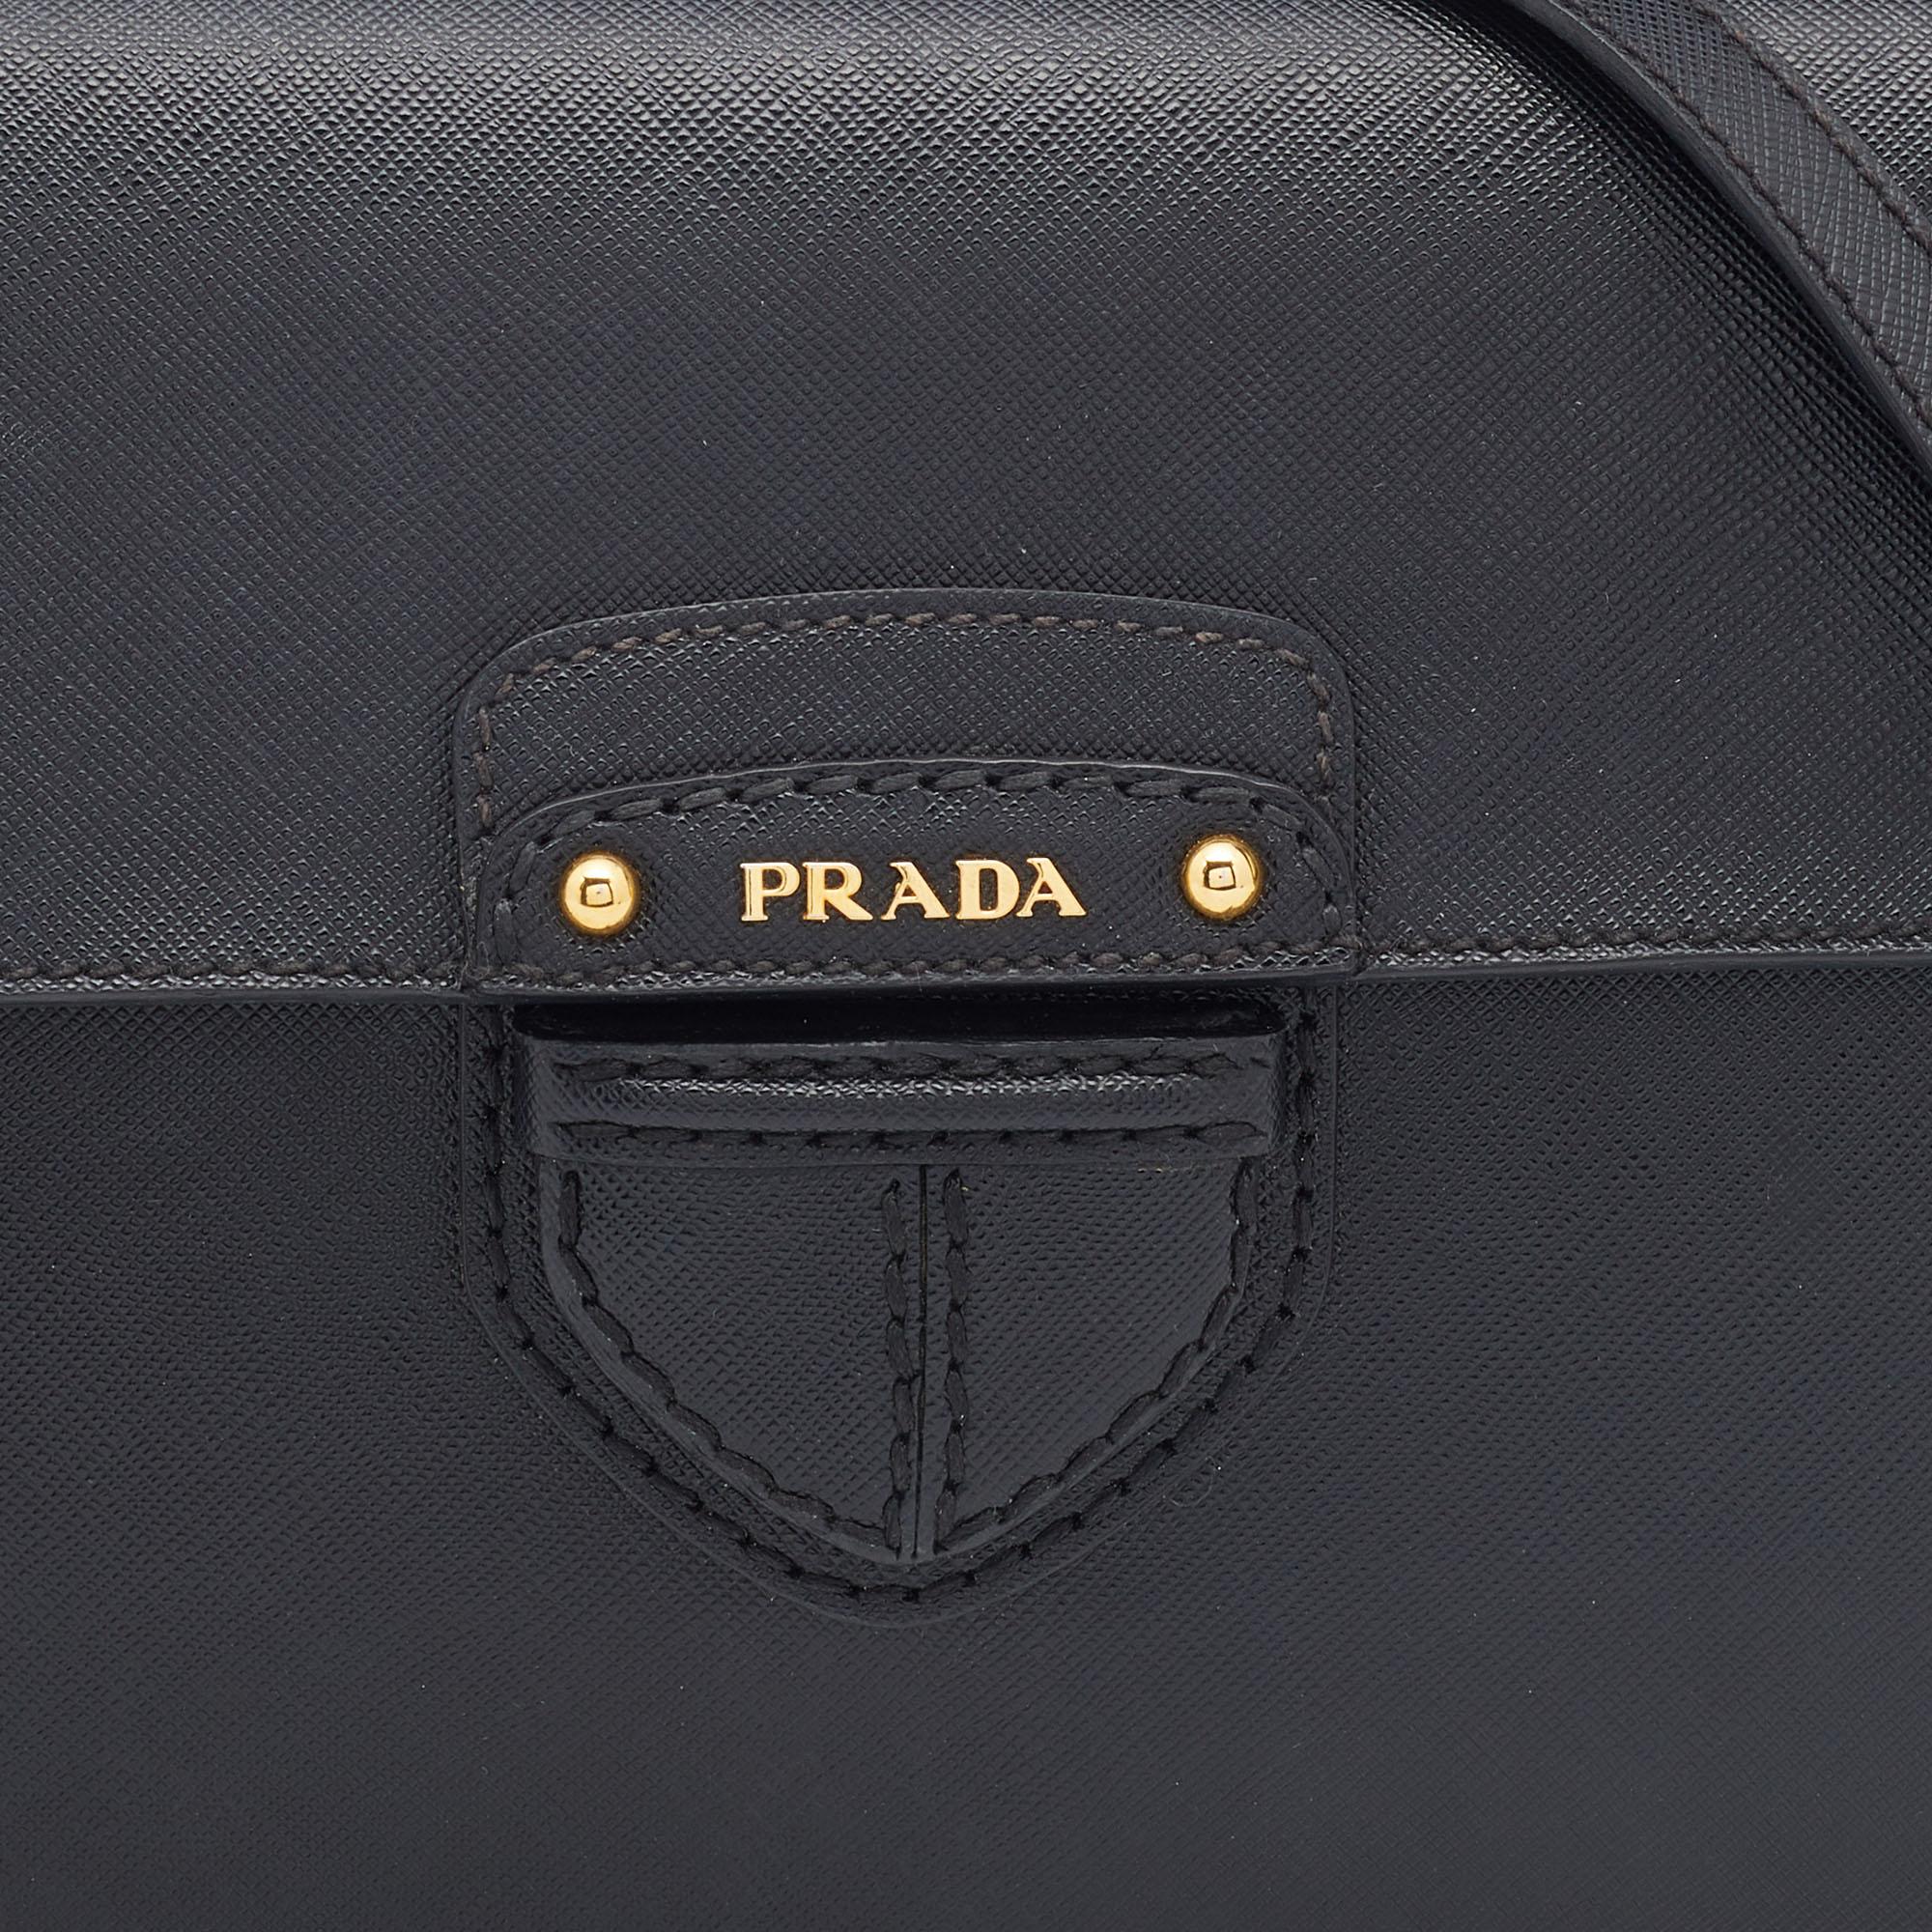 Prada Black Saffiano Leather Cinghiale Flap Crossbody Bag 5